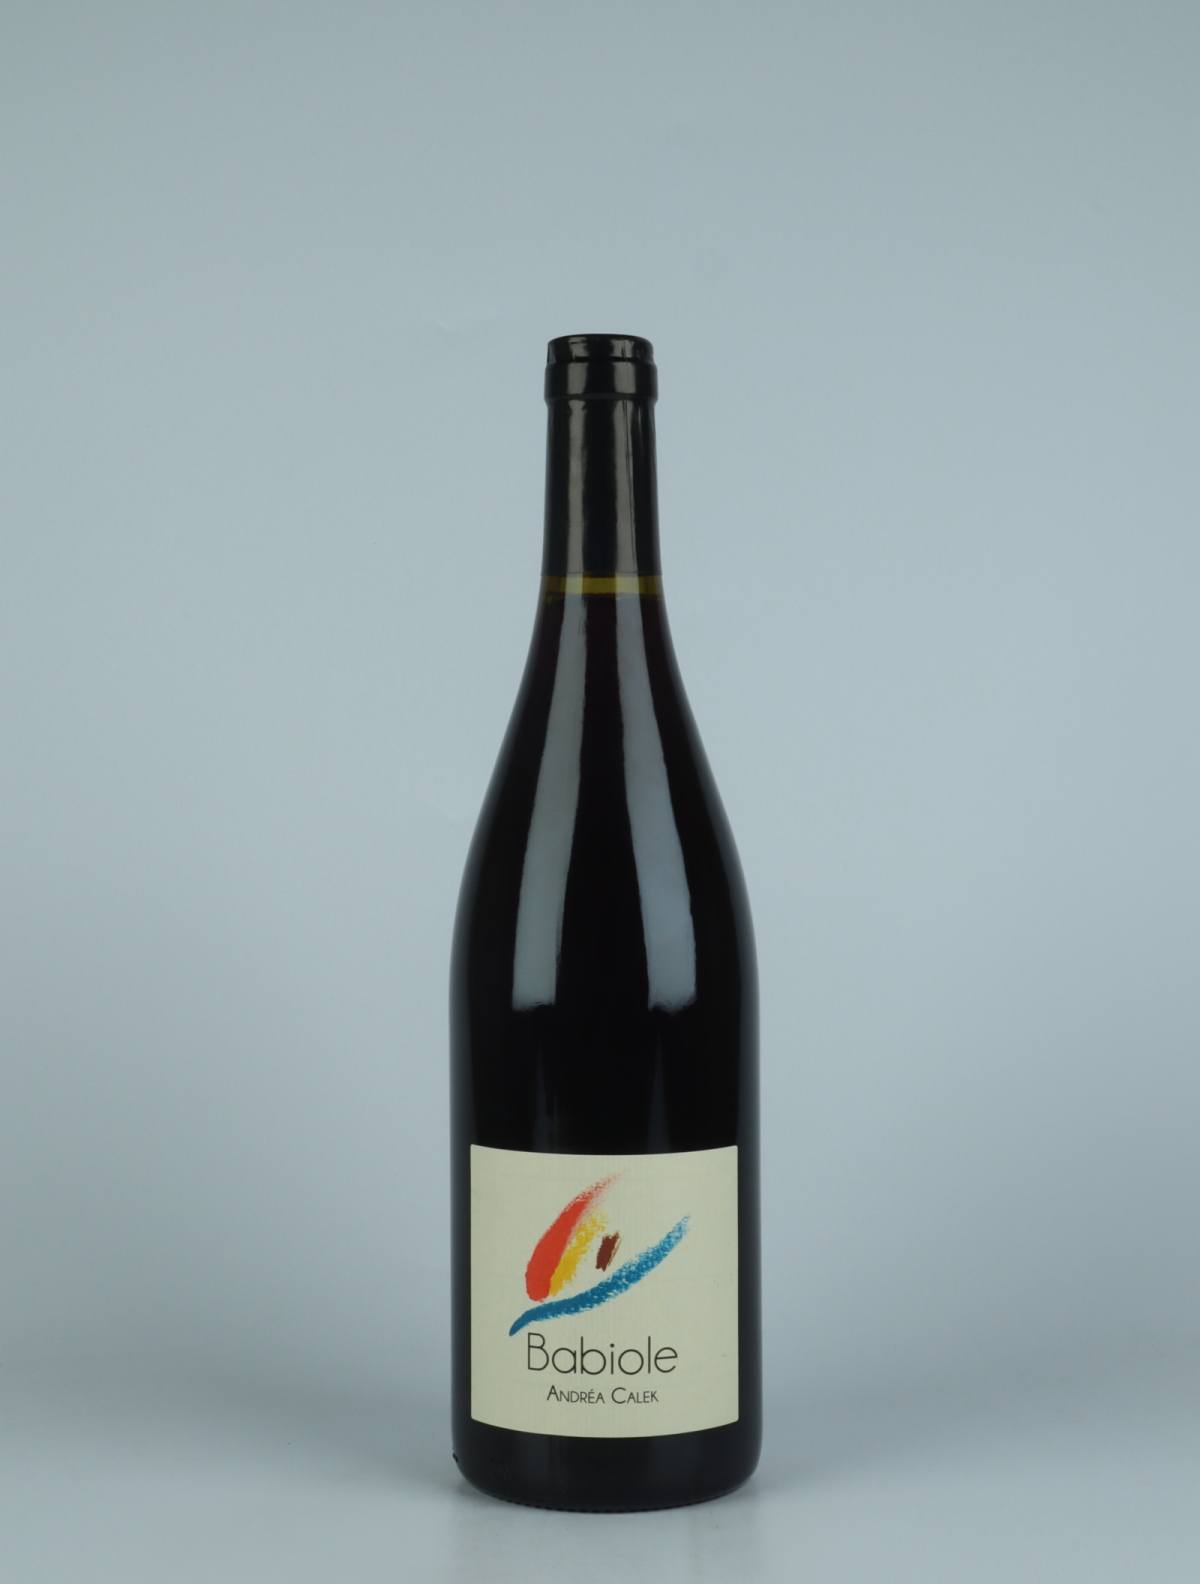 A bottle 2022 Babiole Red wine from Andrea Calek, Ardèche in France